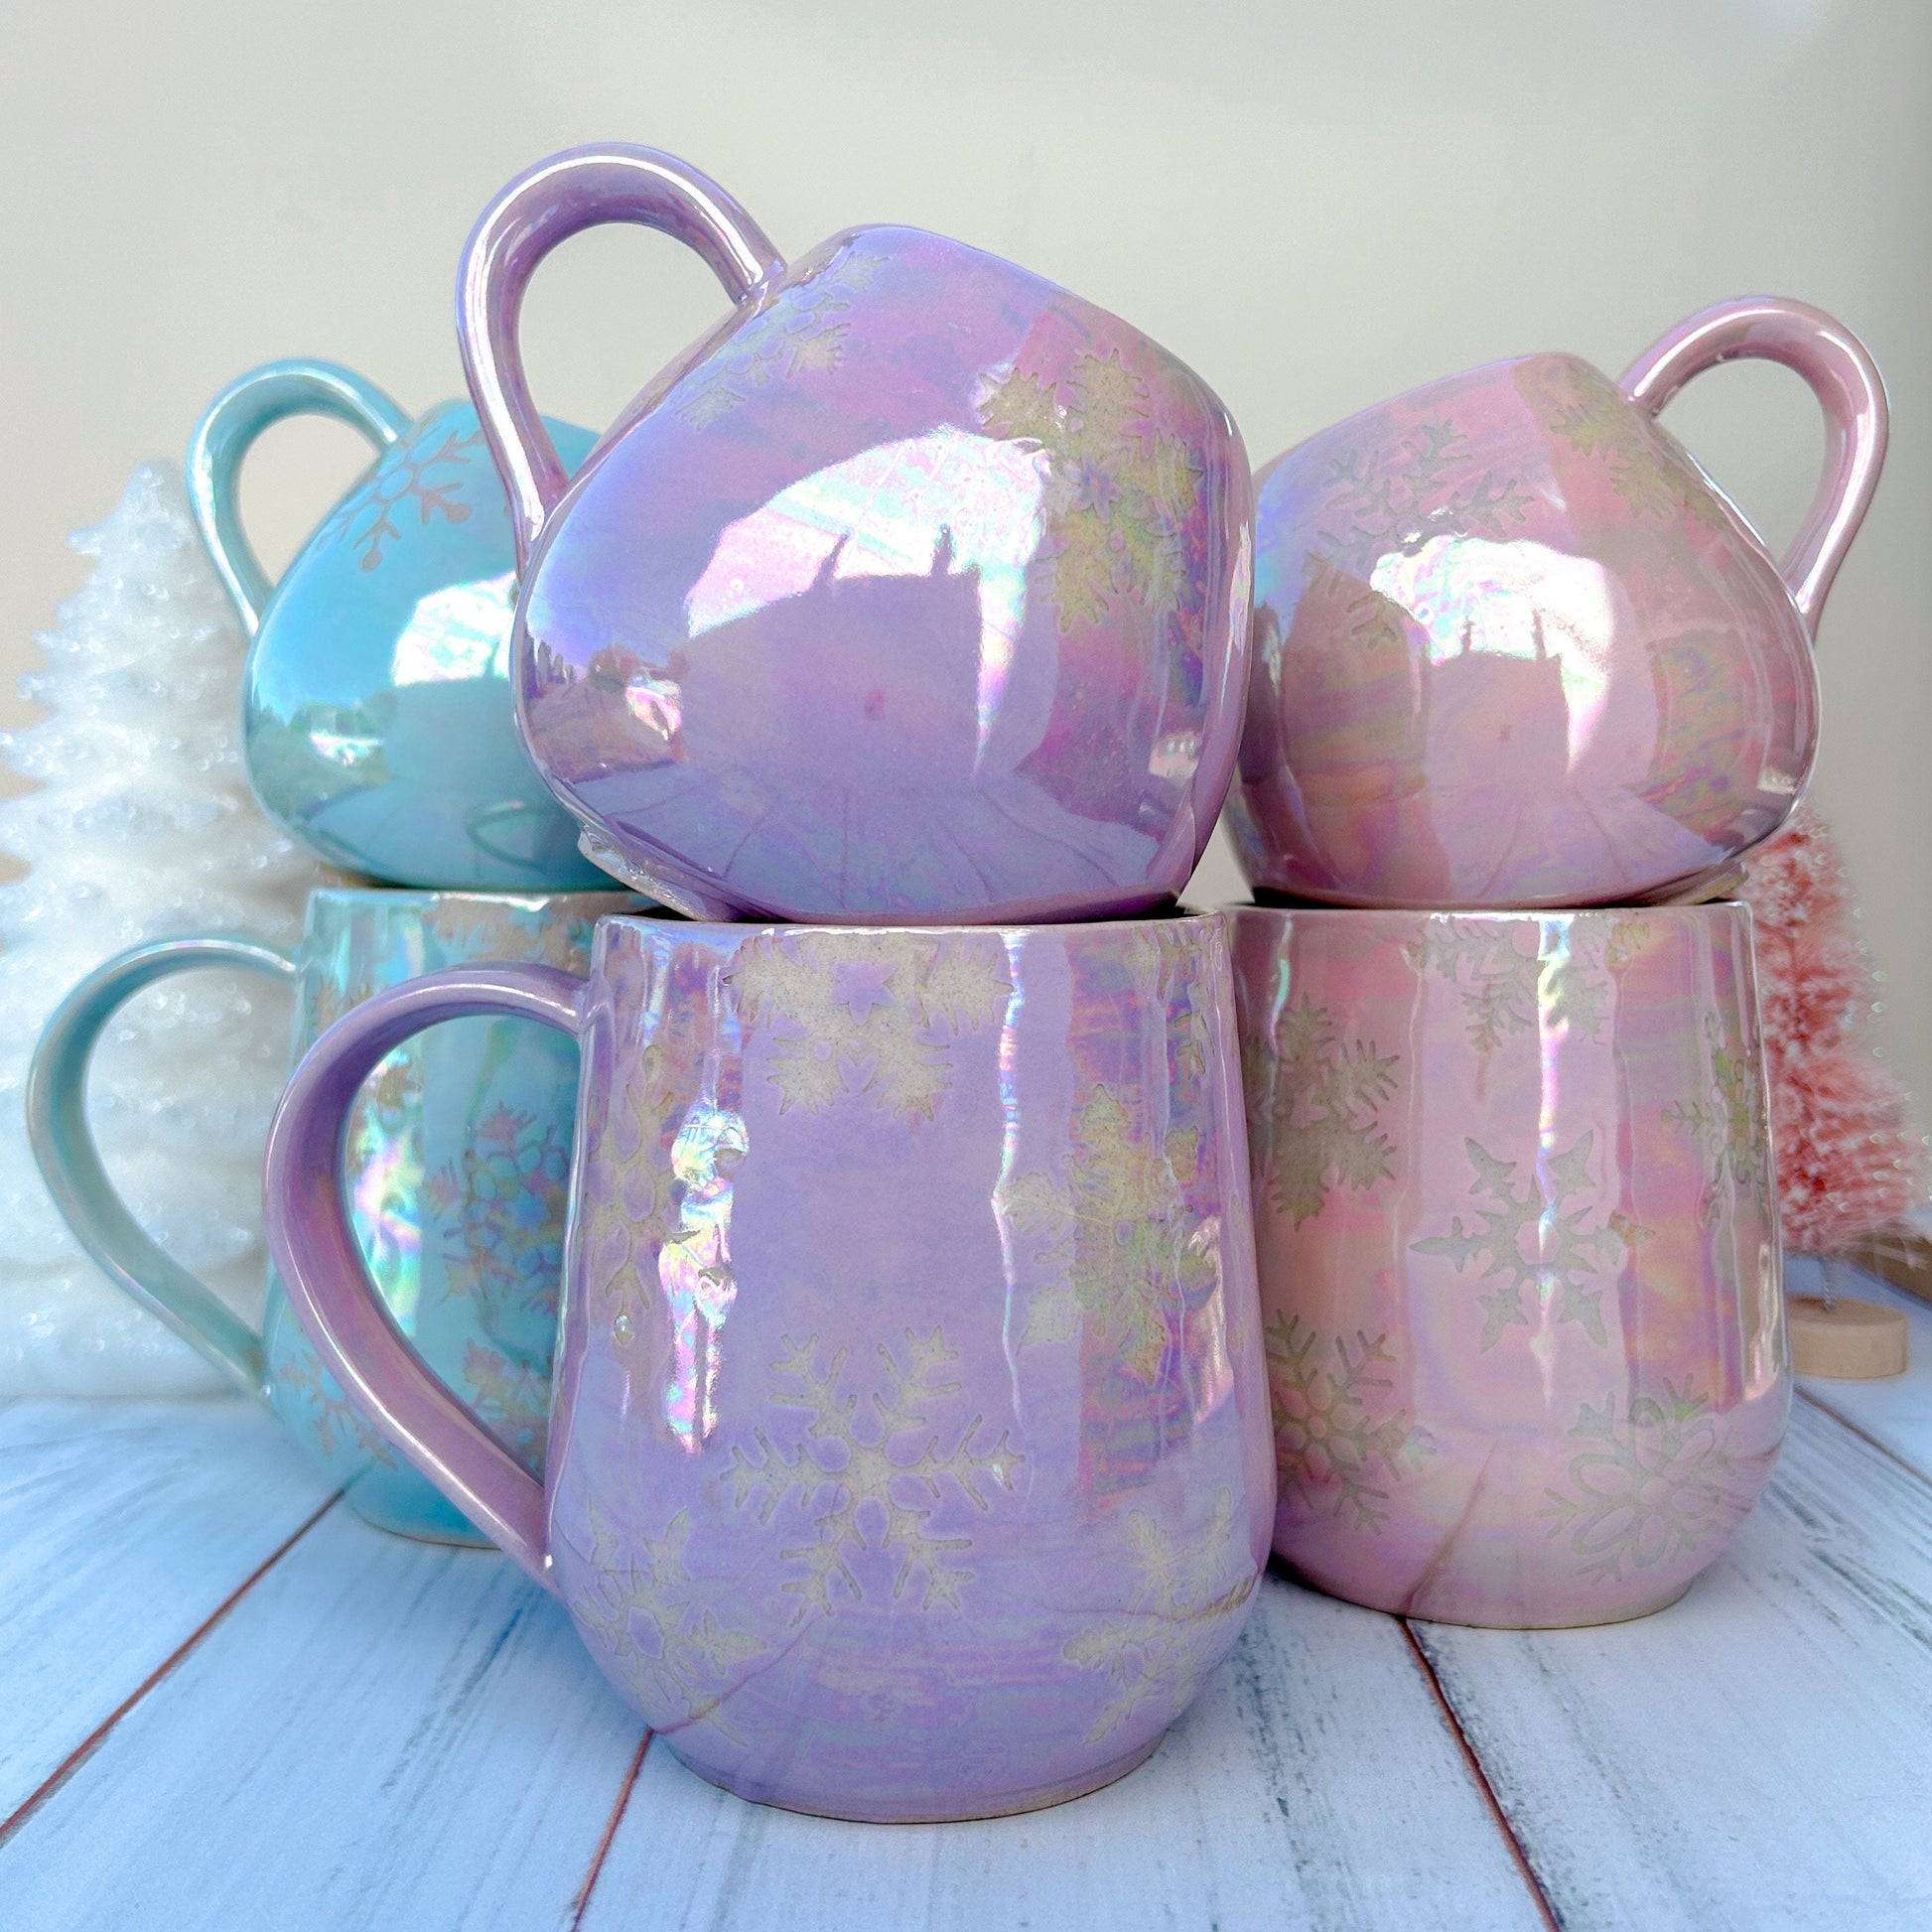 Pearly Blue Winter Coffee Mug, Snowflake Mug, Christmas Mug Ceramic Handmade, Stoneware Mug 12 Oz, Holiday Cup, Cozy Cabin Gift, Winter Gift